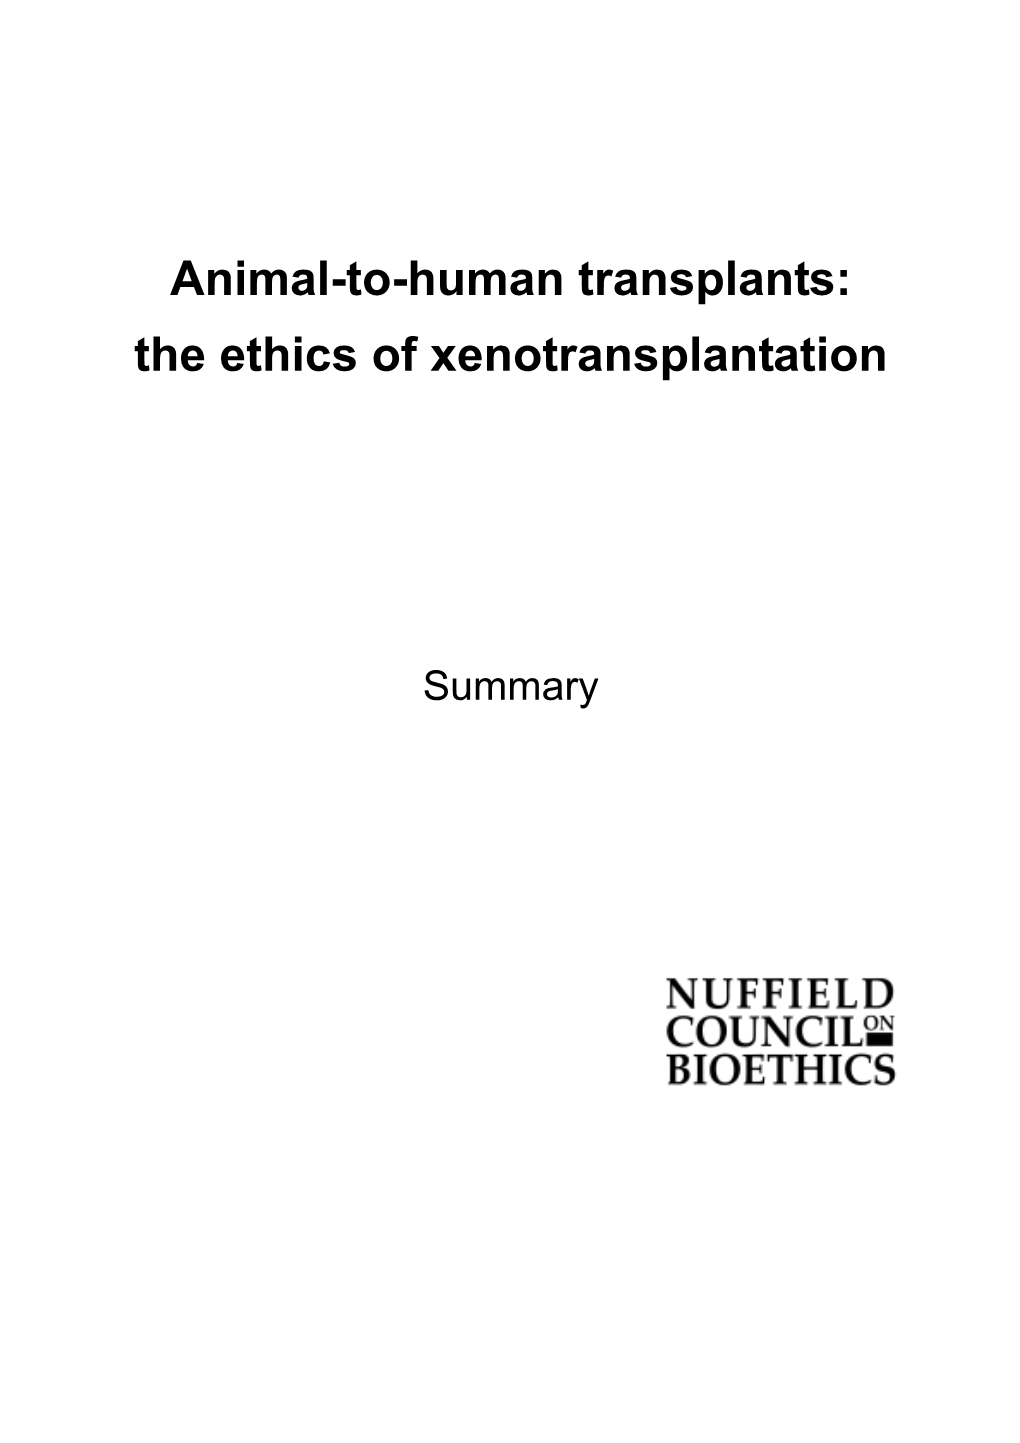 Animal-To-Human Transplants: the Ethics of Xenotransplantation